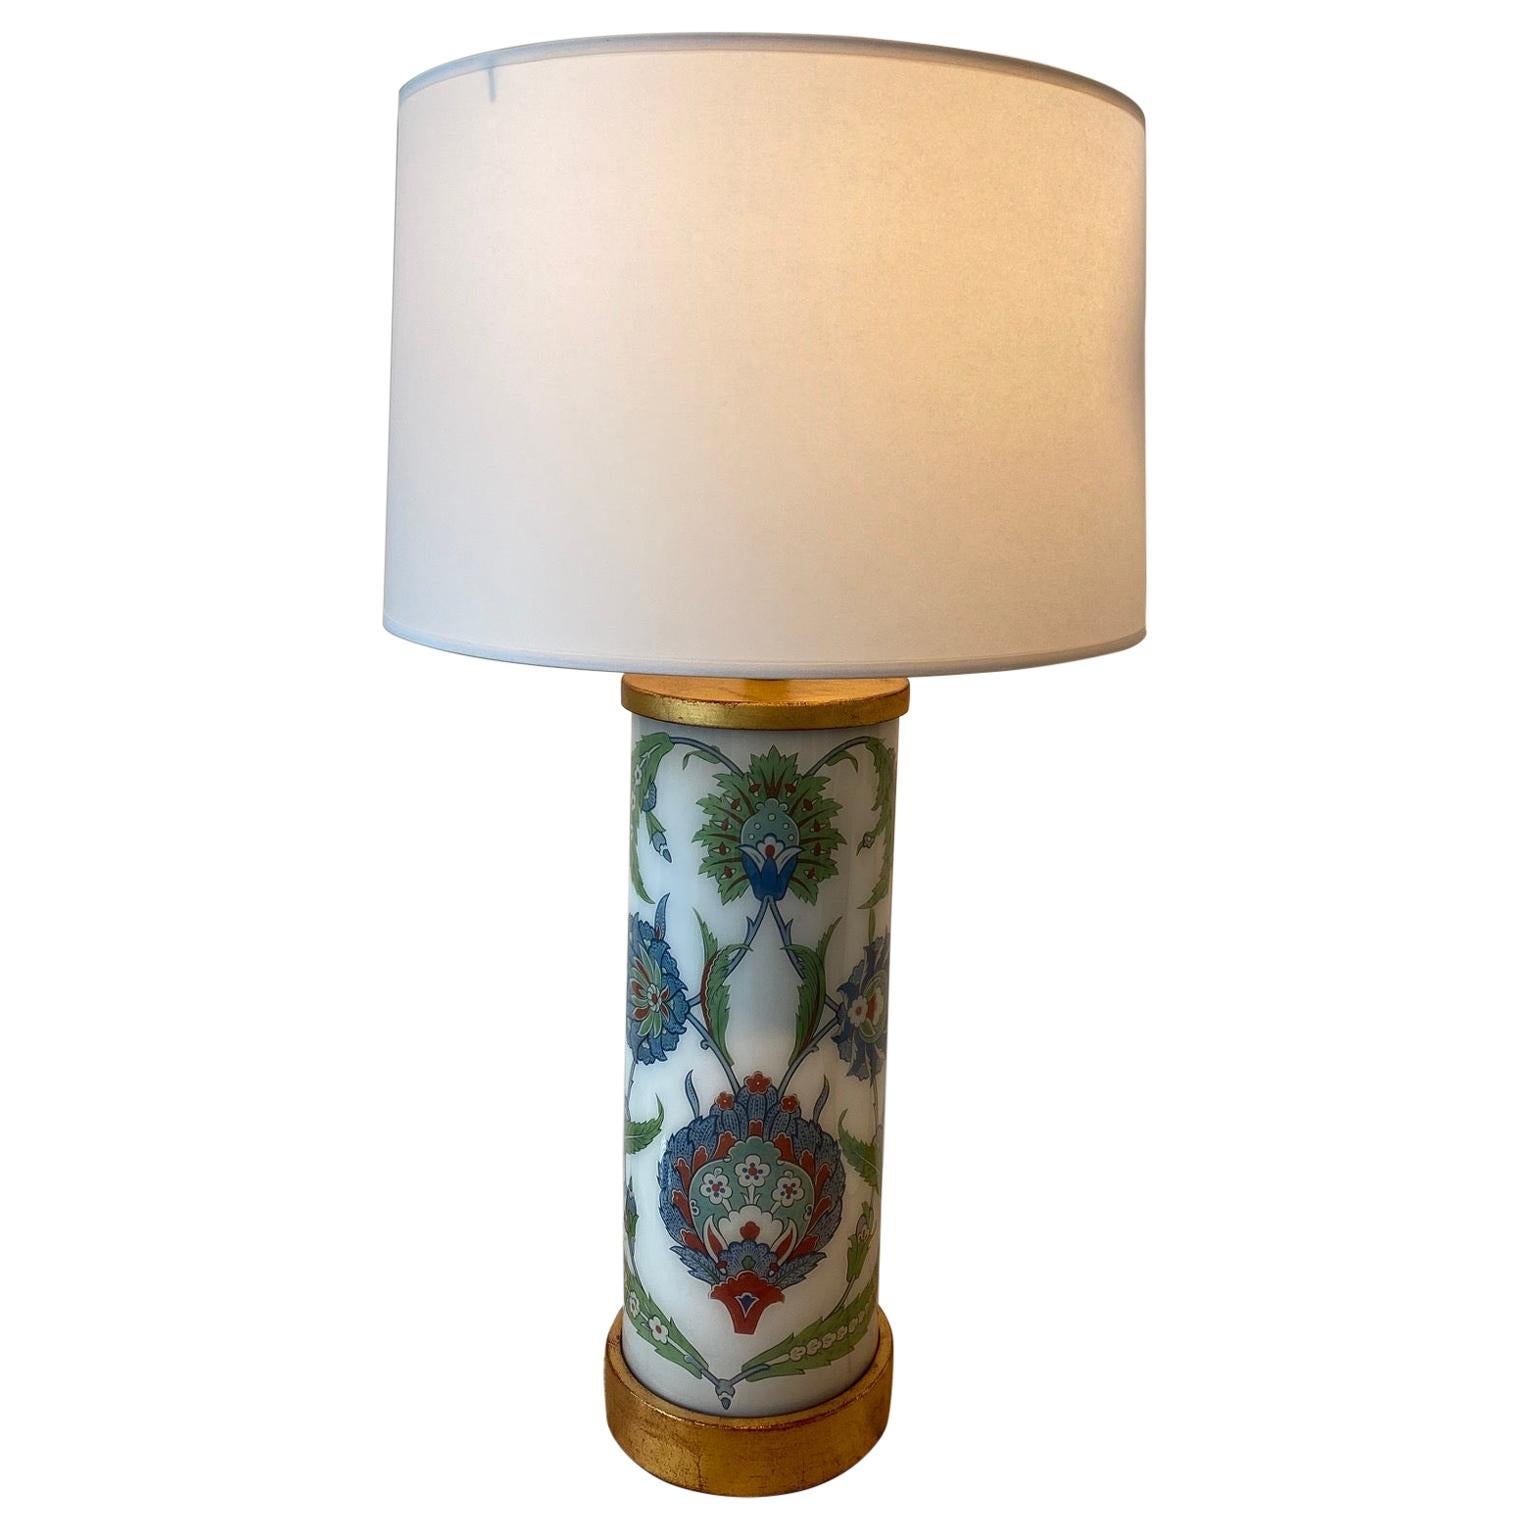 Liz Marsh Designs Iznik Decoupage Lamp For Sale